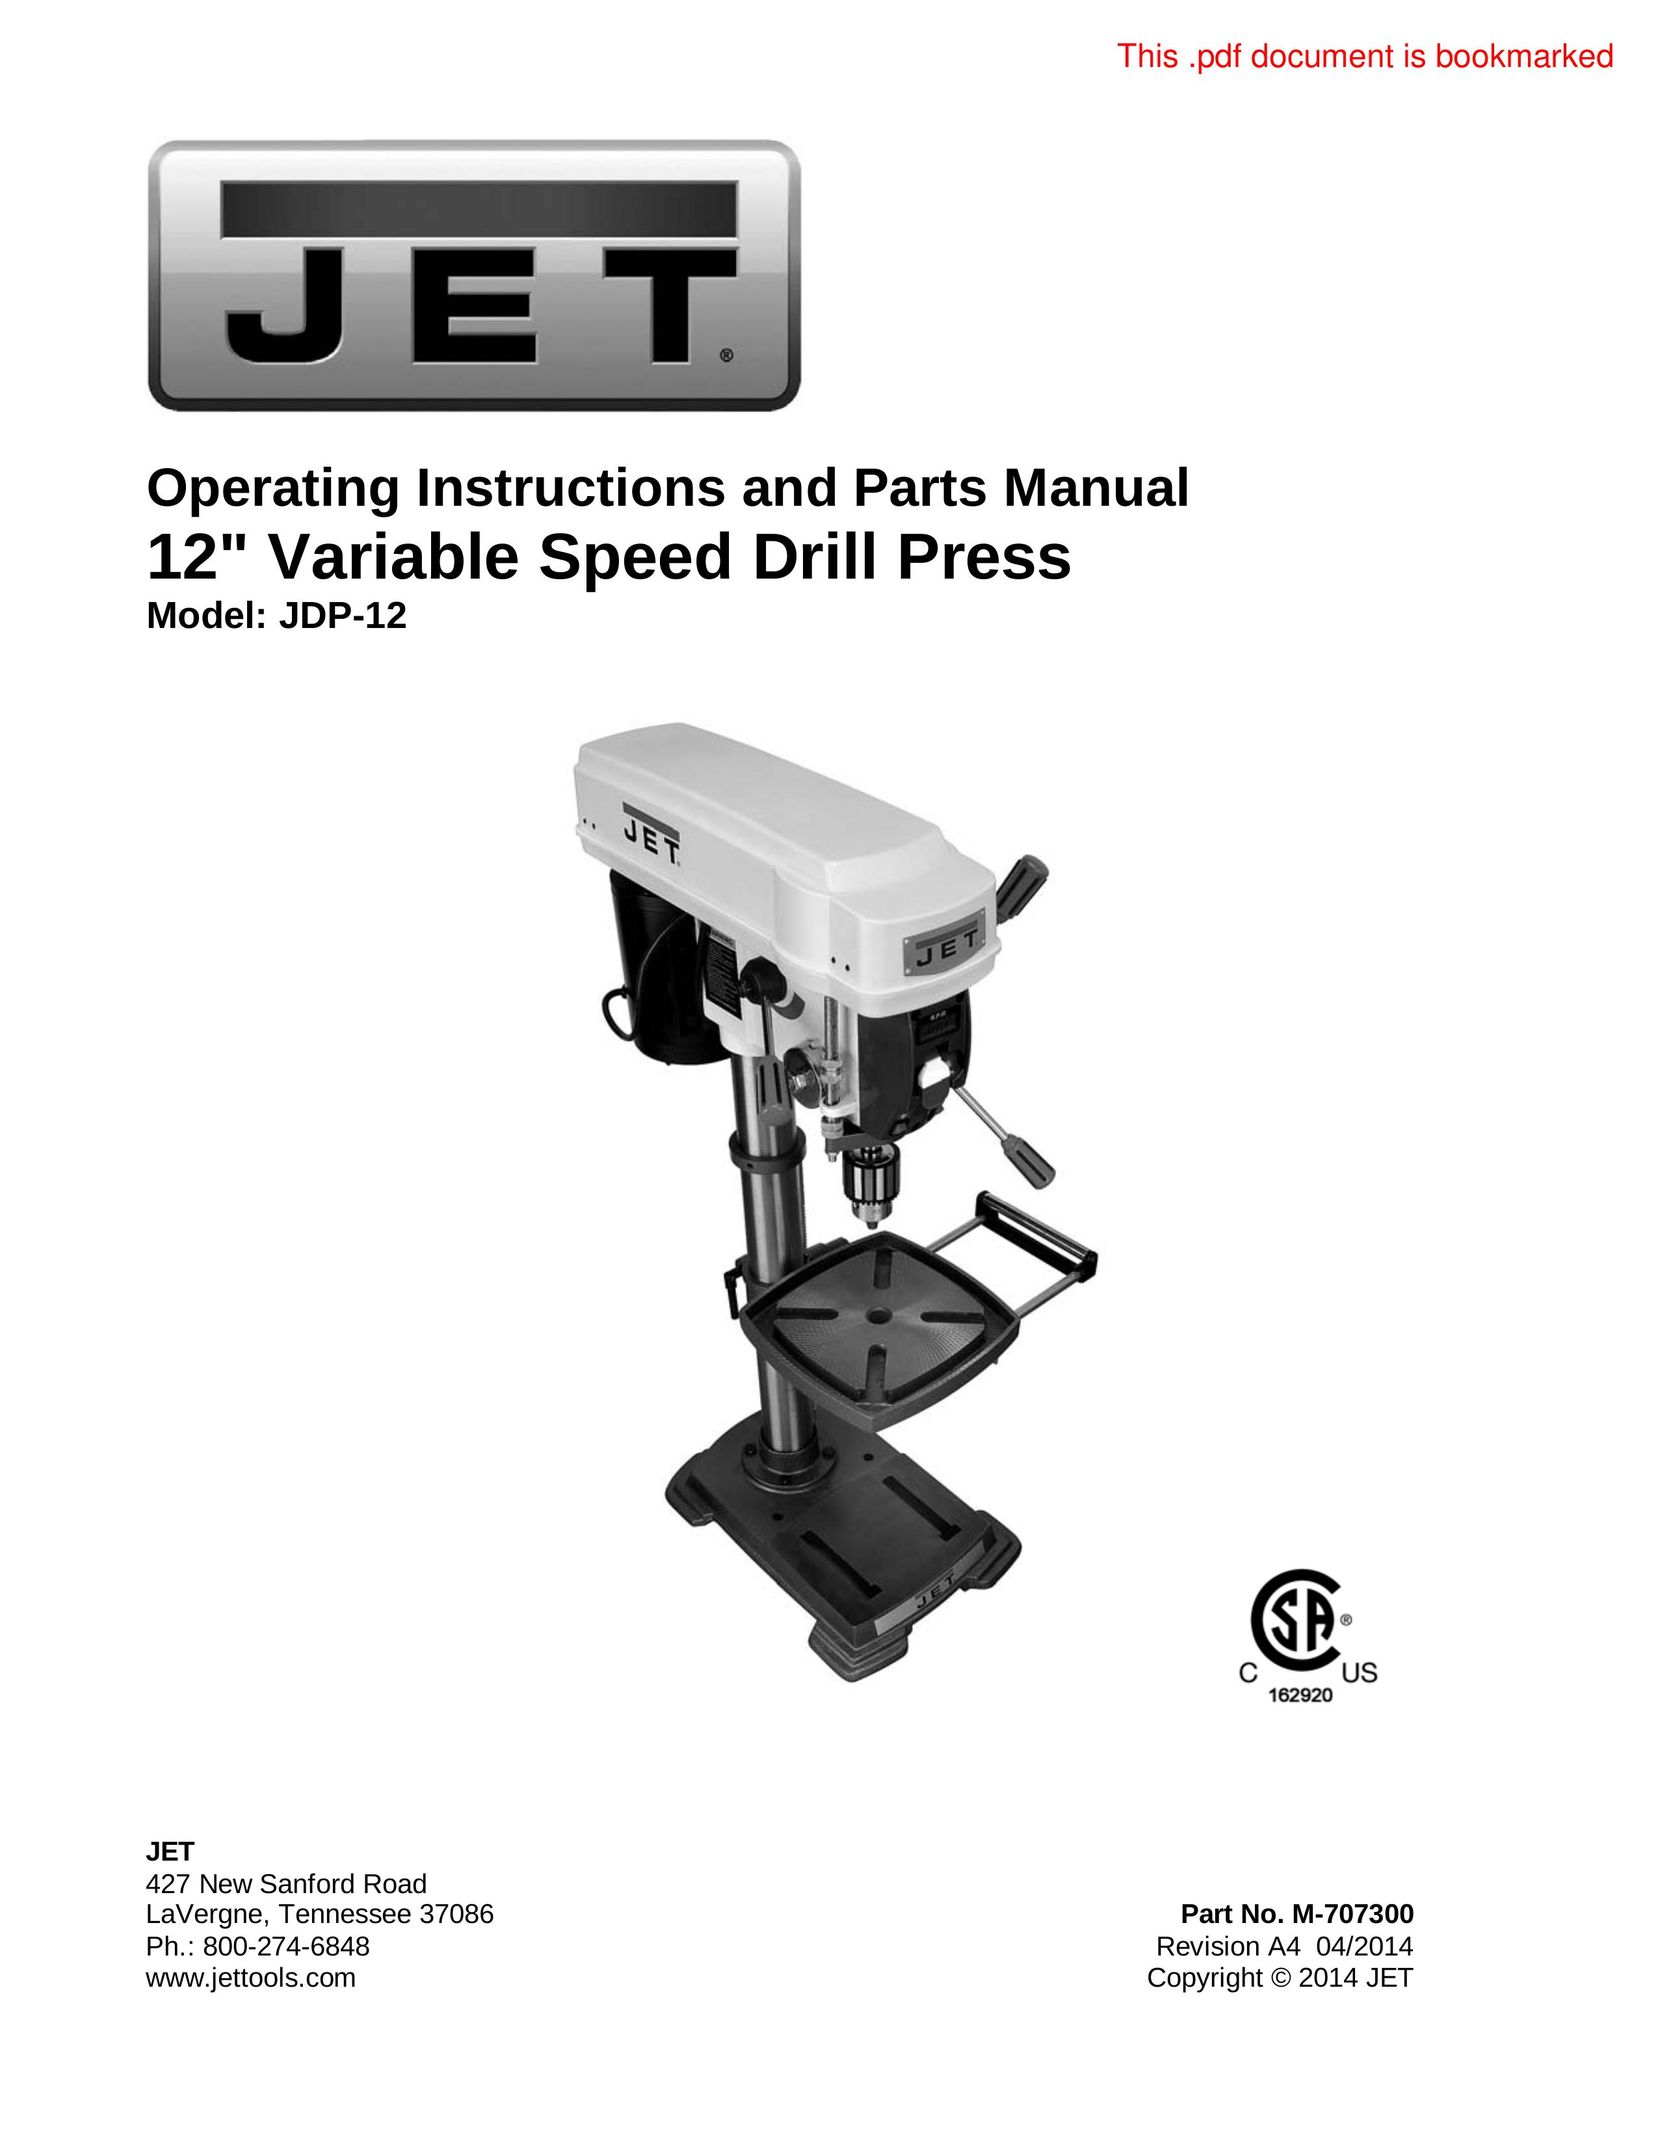 Jet Tools JDP-12 Cordless Drill User Manual